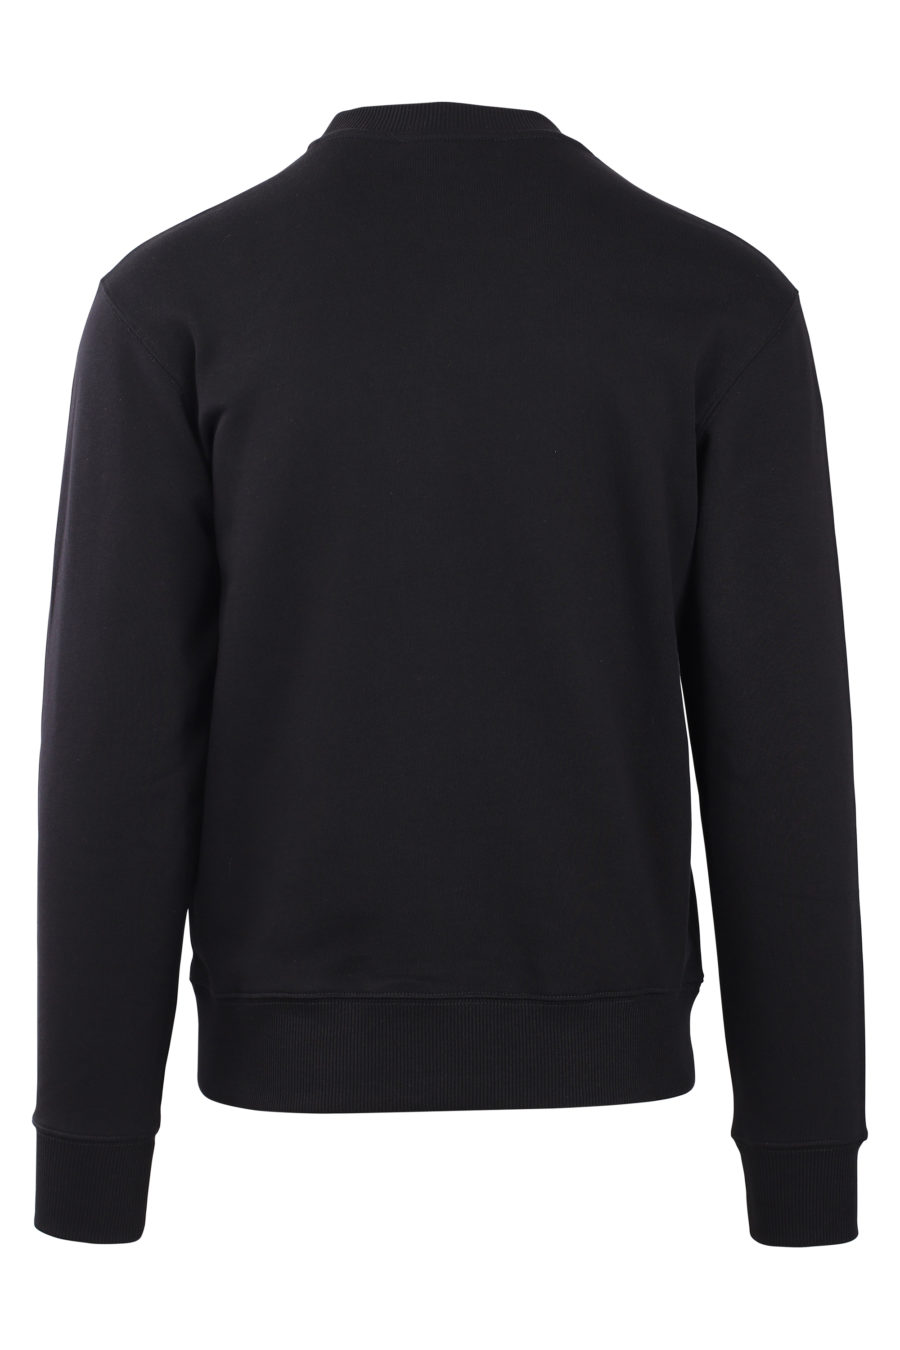 Schwarzes Sweatshirt mit vergoldetem Logo - IMG 0806